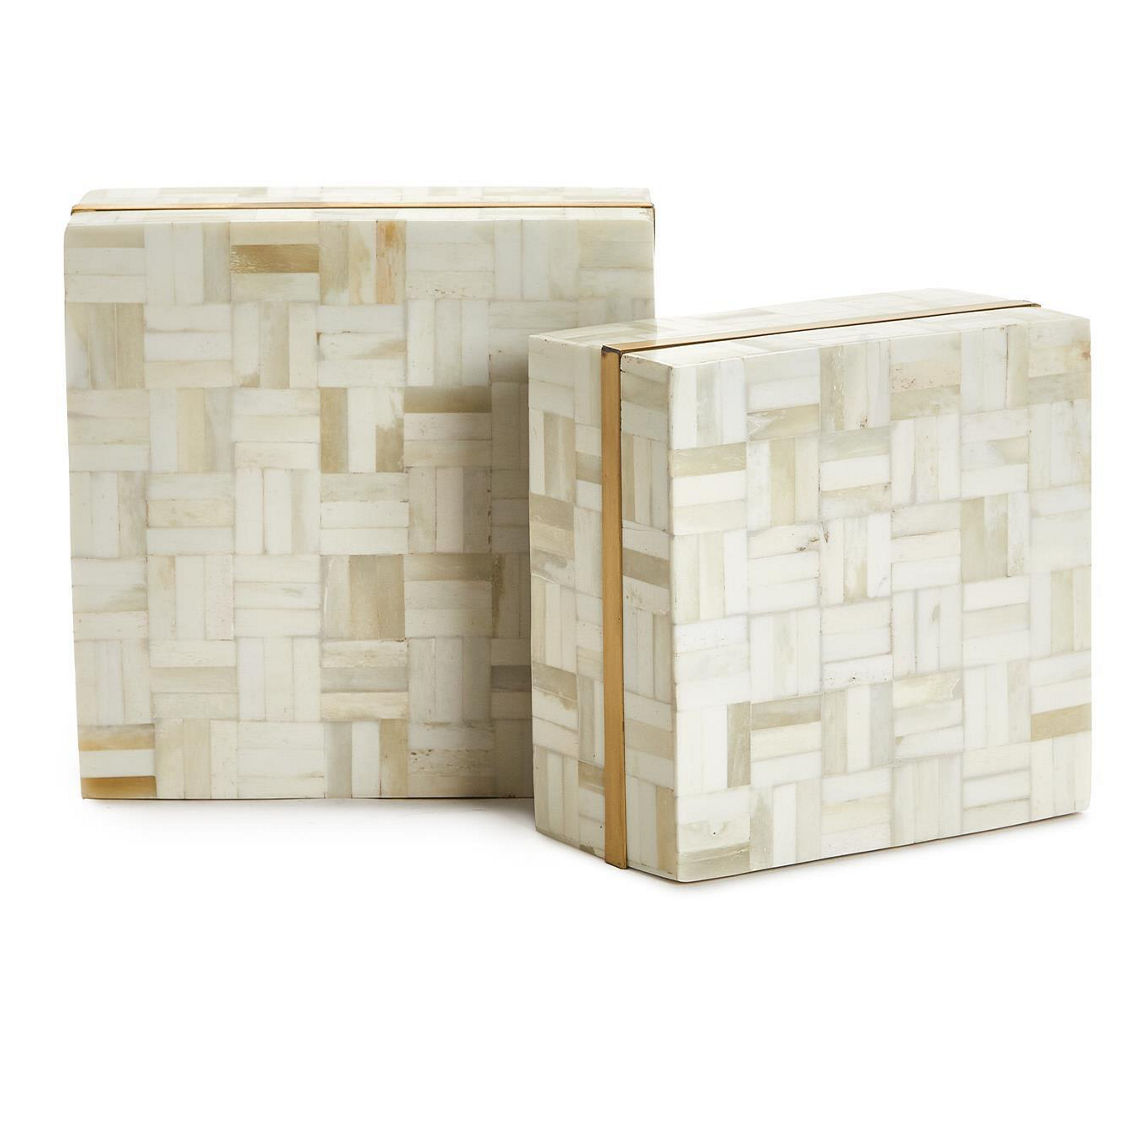 Tozai S2 Whitestone Mosaic Tile Box - Image 3 of 4